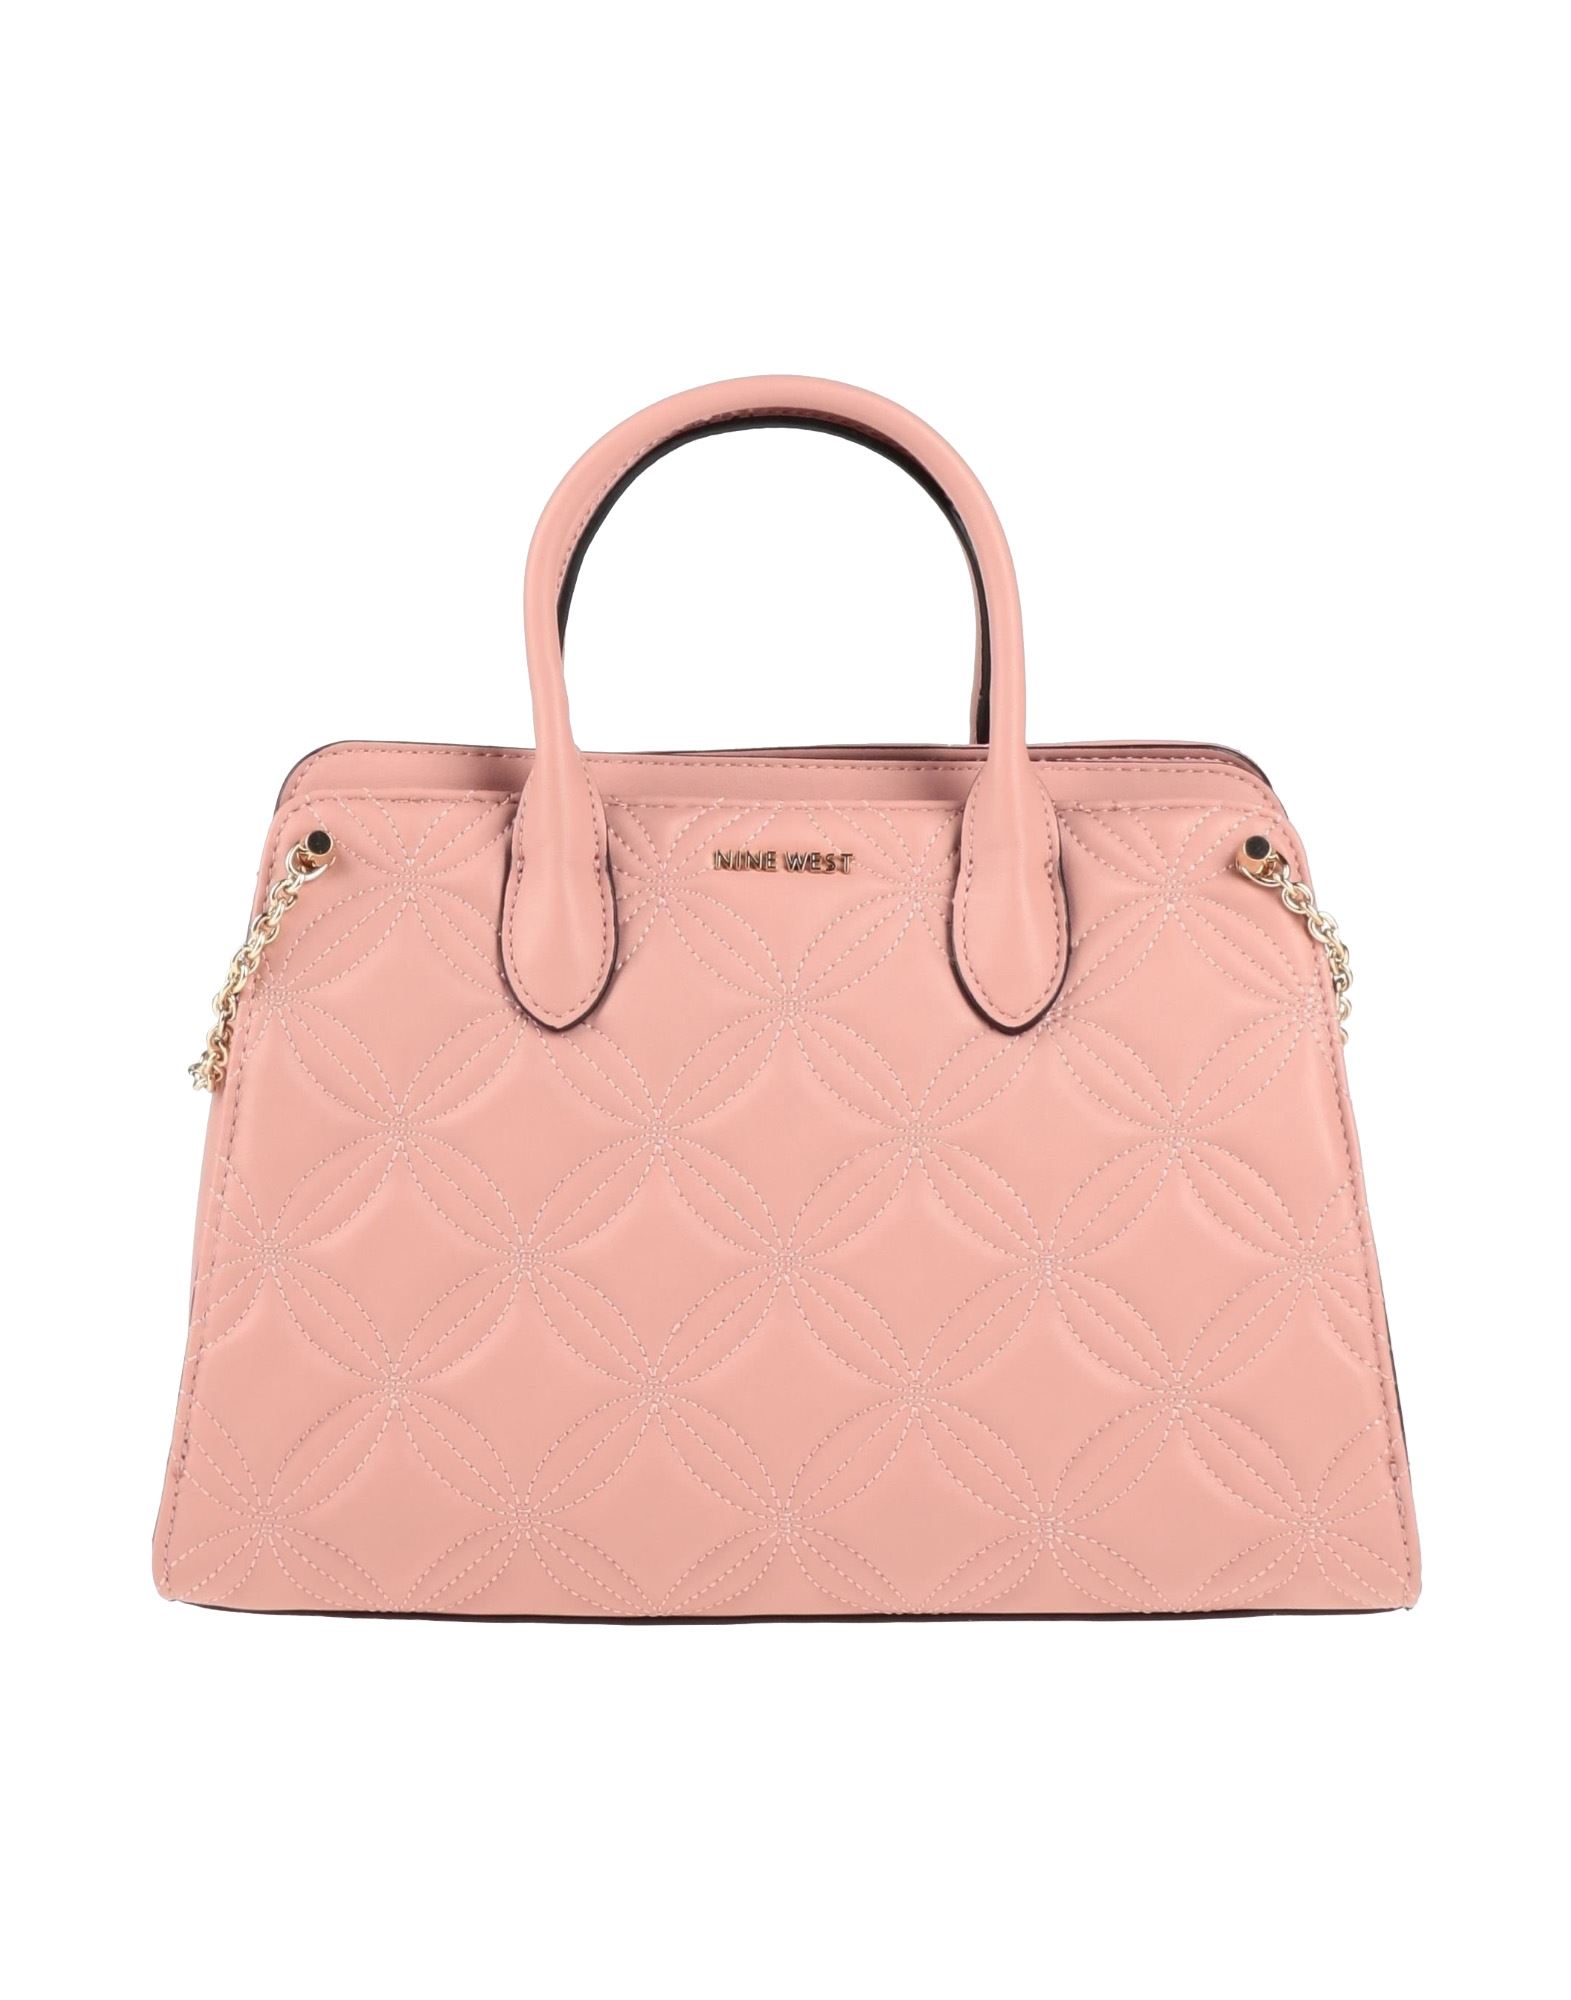 Nine West Handbags In Pink